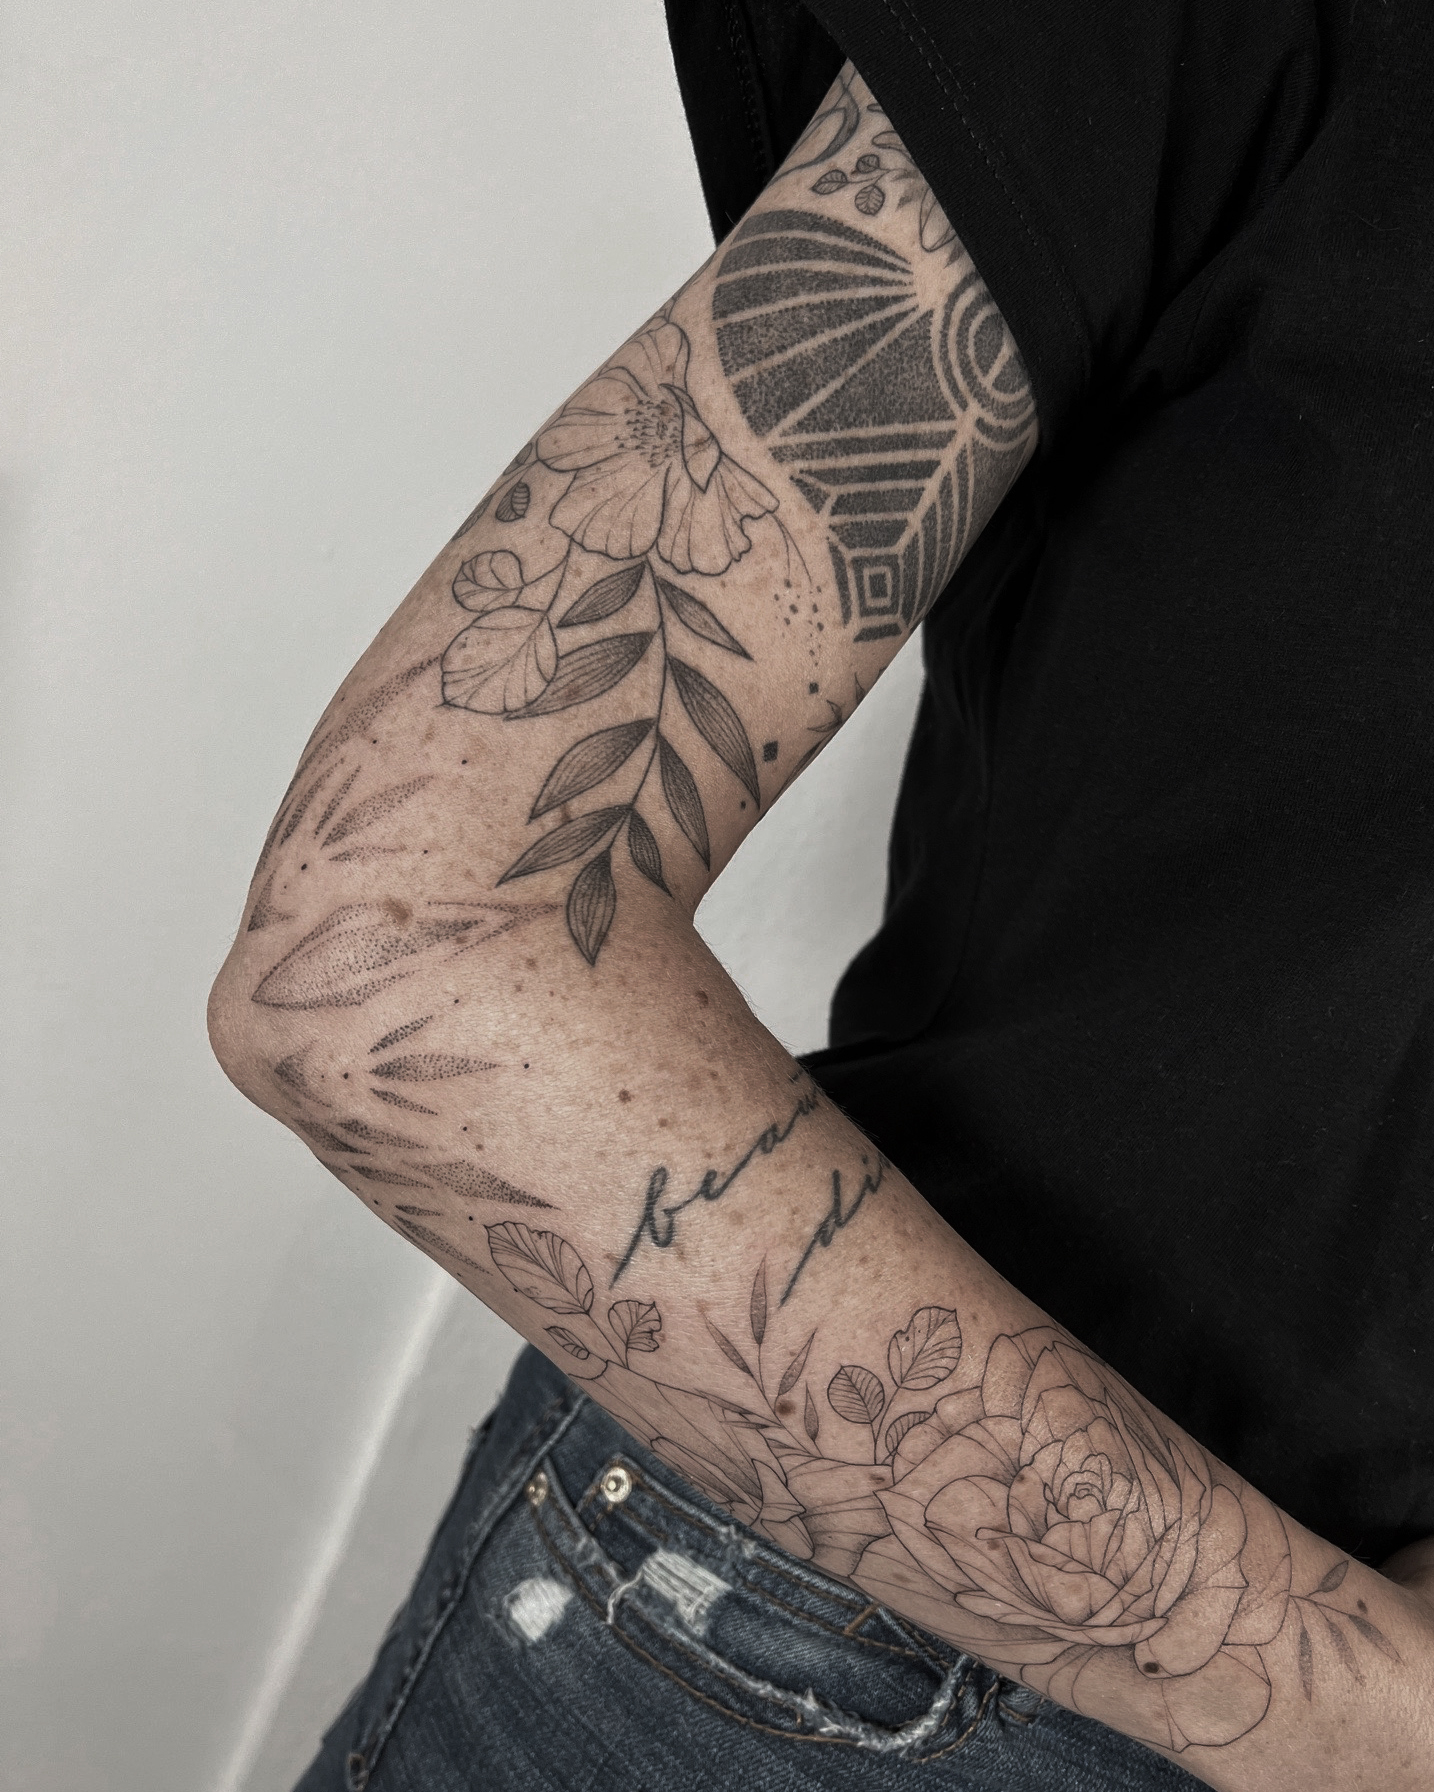 fineline flower sleeve tattoo with a rose from smasli ink an female tattoo artist working in salzburg austria